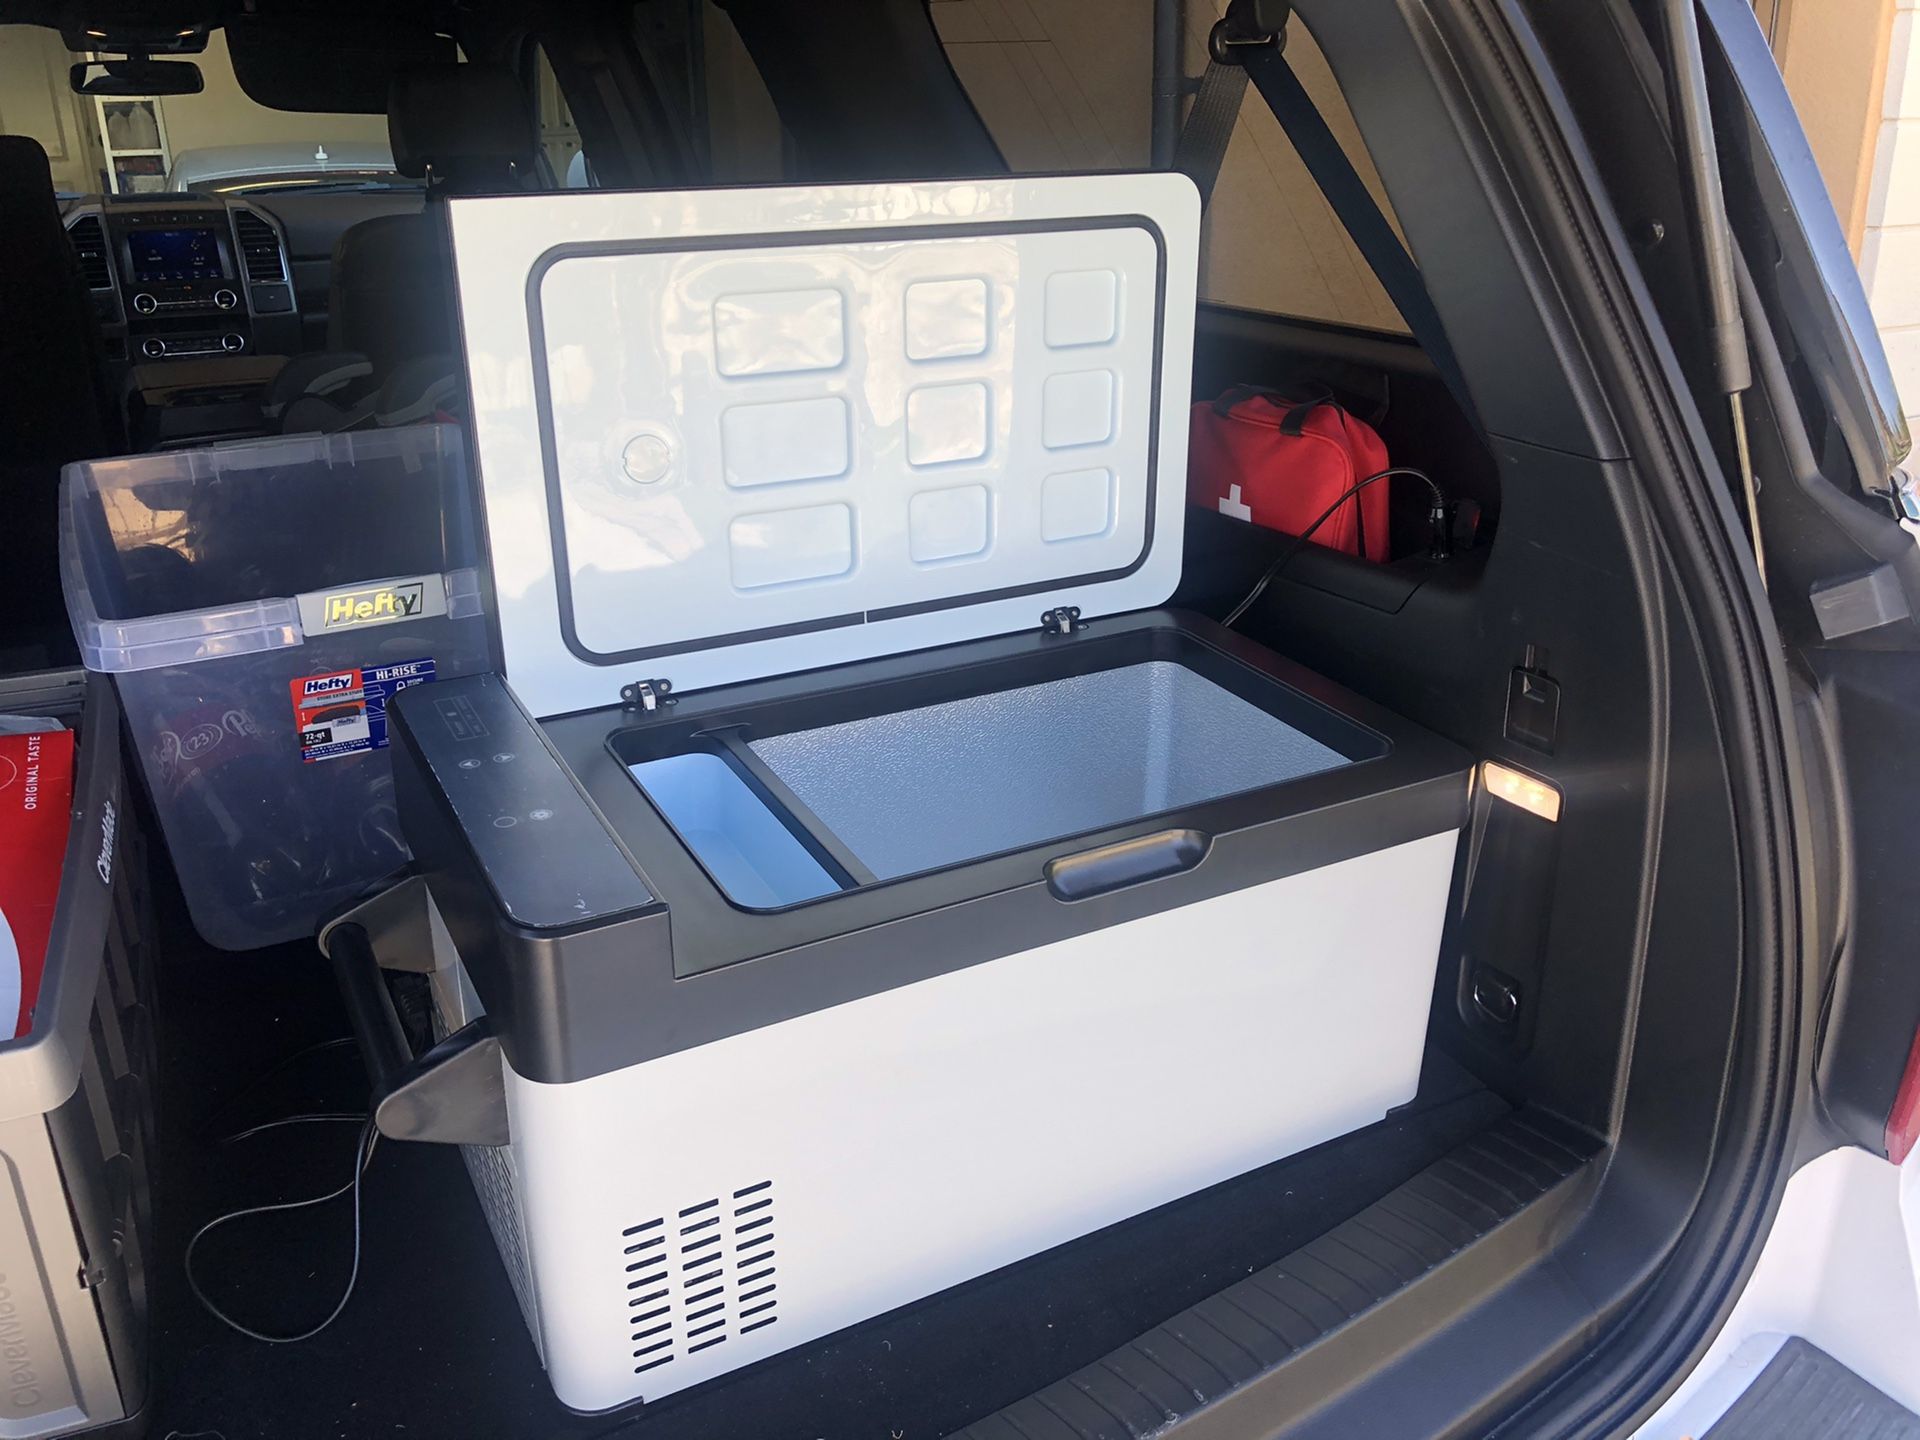 Portable RV camping 12 24volt Electric Powered Cooler Iceless Freezer Compressor Mini Refrigerator Fridge